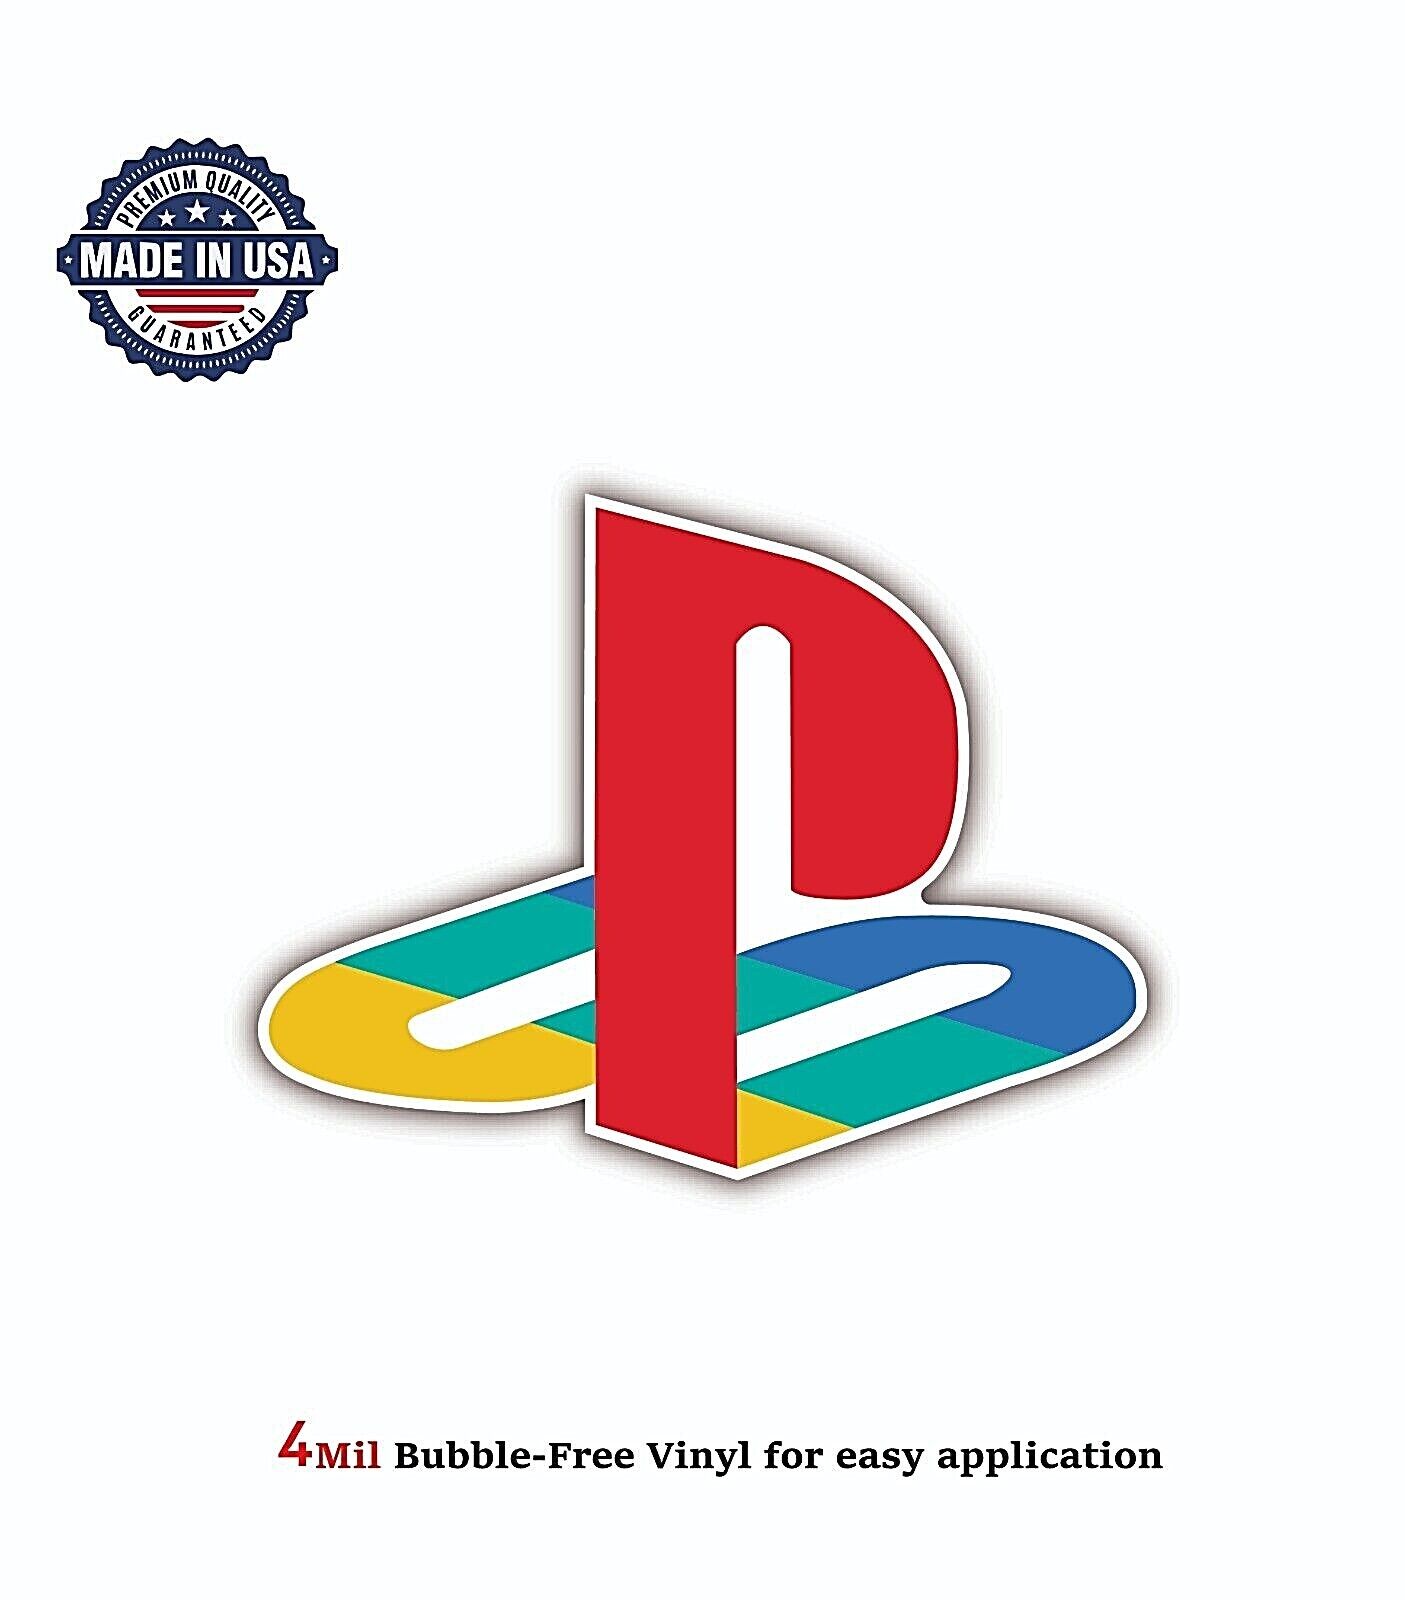 PLAYSTATION VIDEO GAME LOGO VINYL DECAL STICKER CAR BUMPER GARAGE 4M BUBBLE FREE